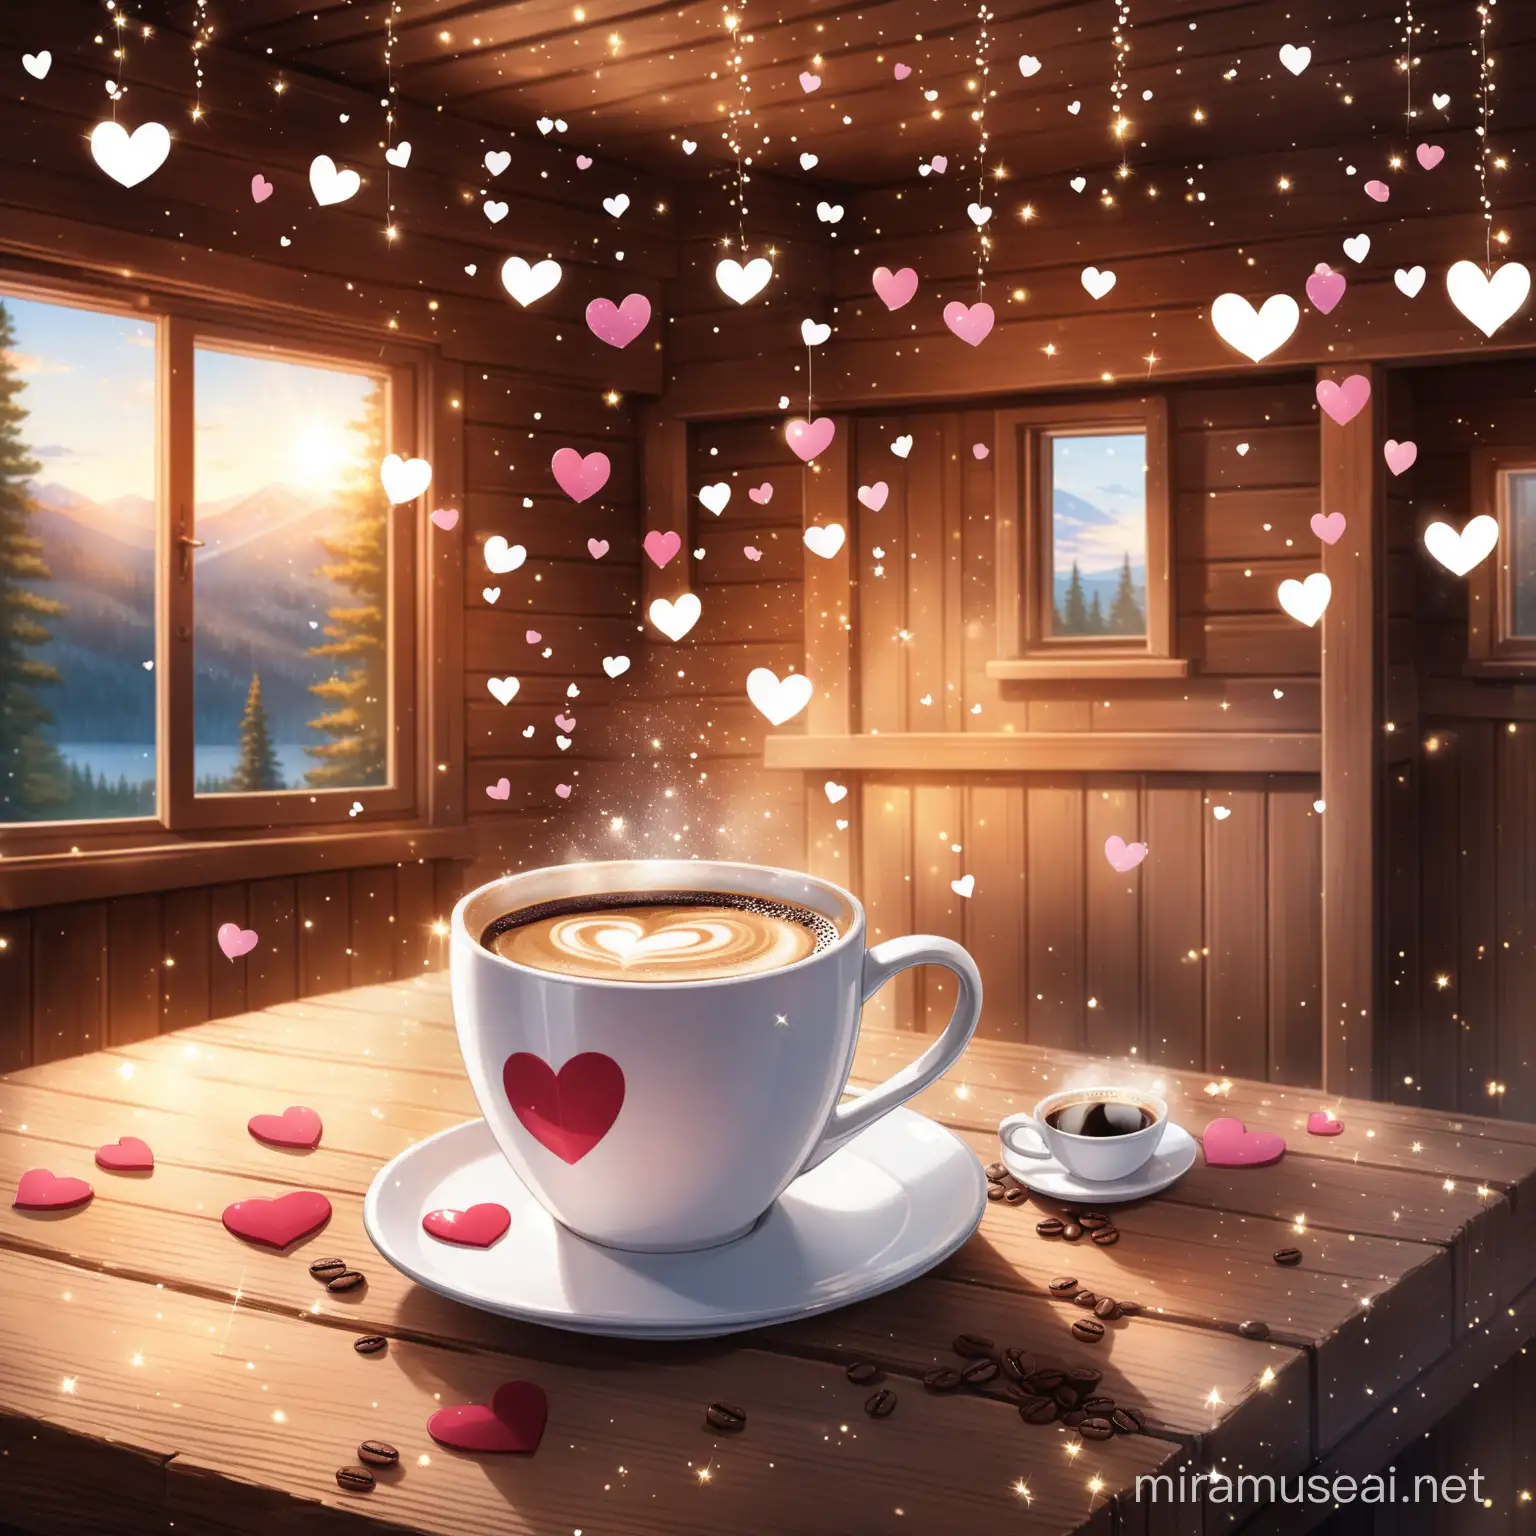 Cozy Cabin Getaway with Heartfelt Coffee Moments